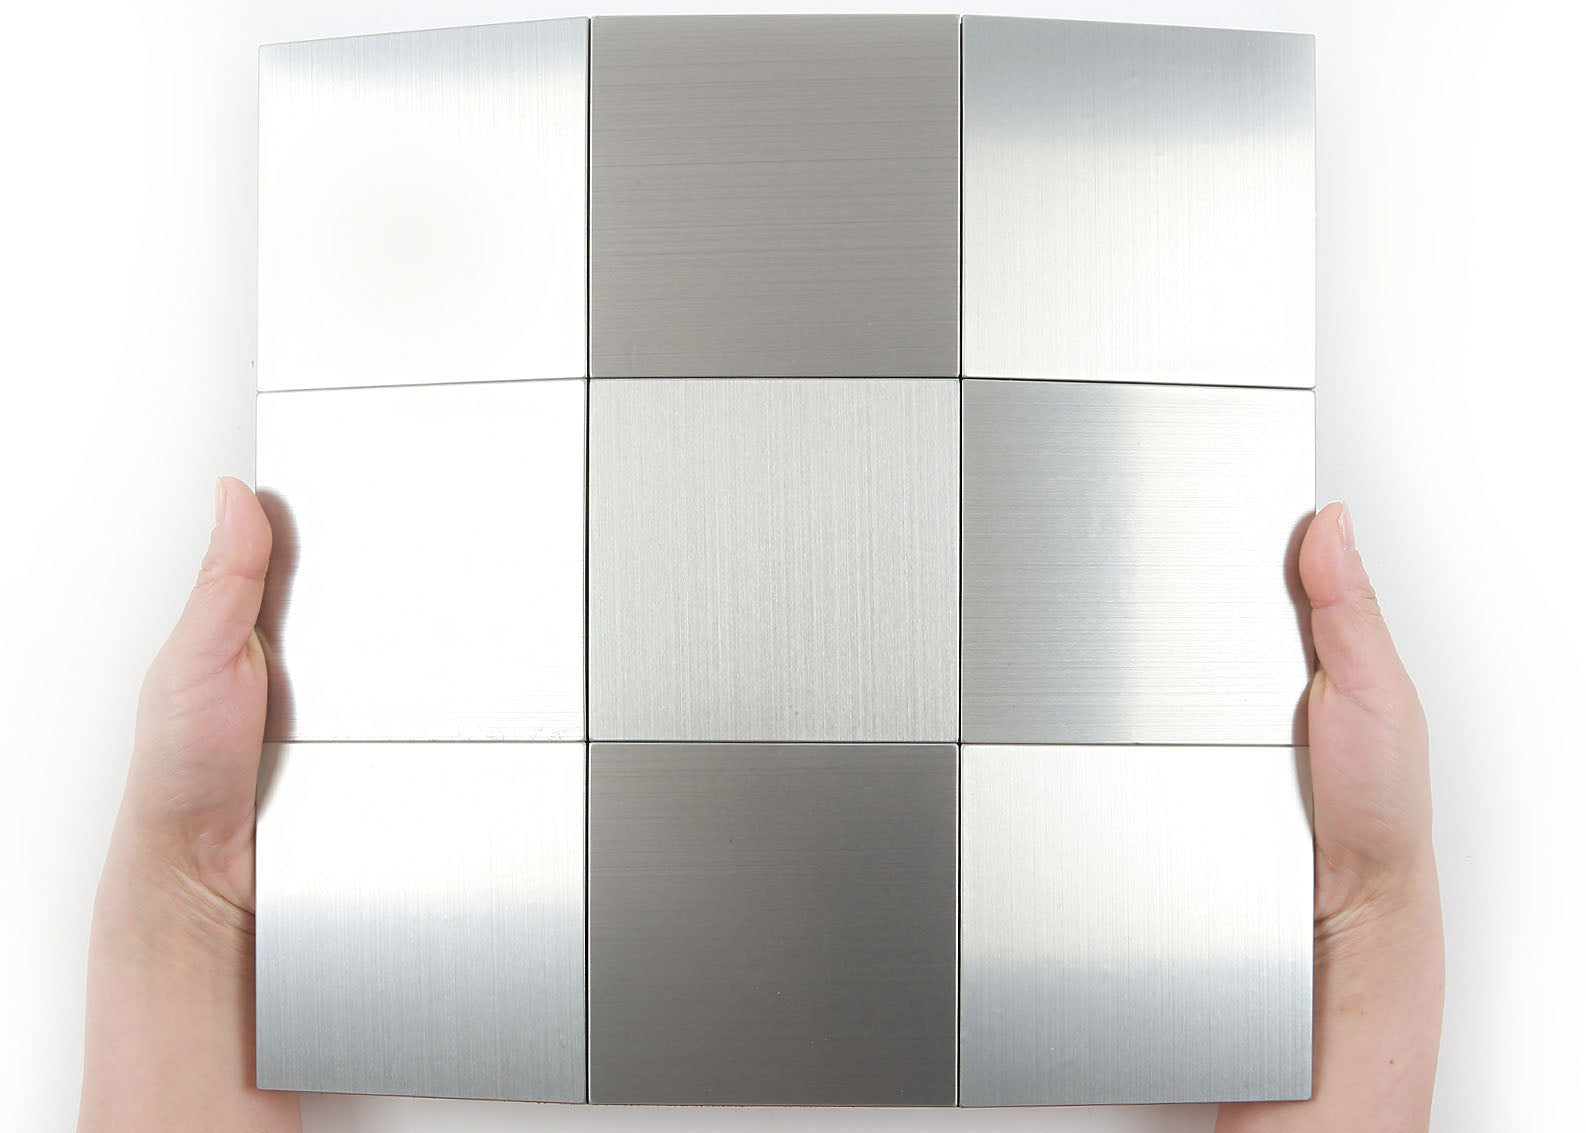 ROSEROSA Peel and Stick Tile Metal Backsplash for Kitchen, Wall Tiles Aluminum Surface : Pack of 5 (Metal-302)